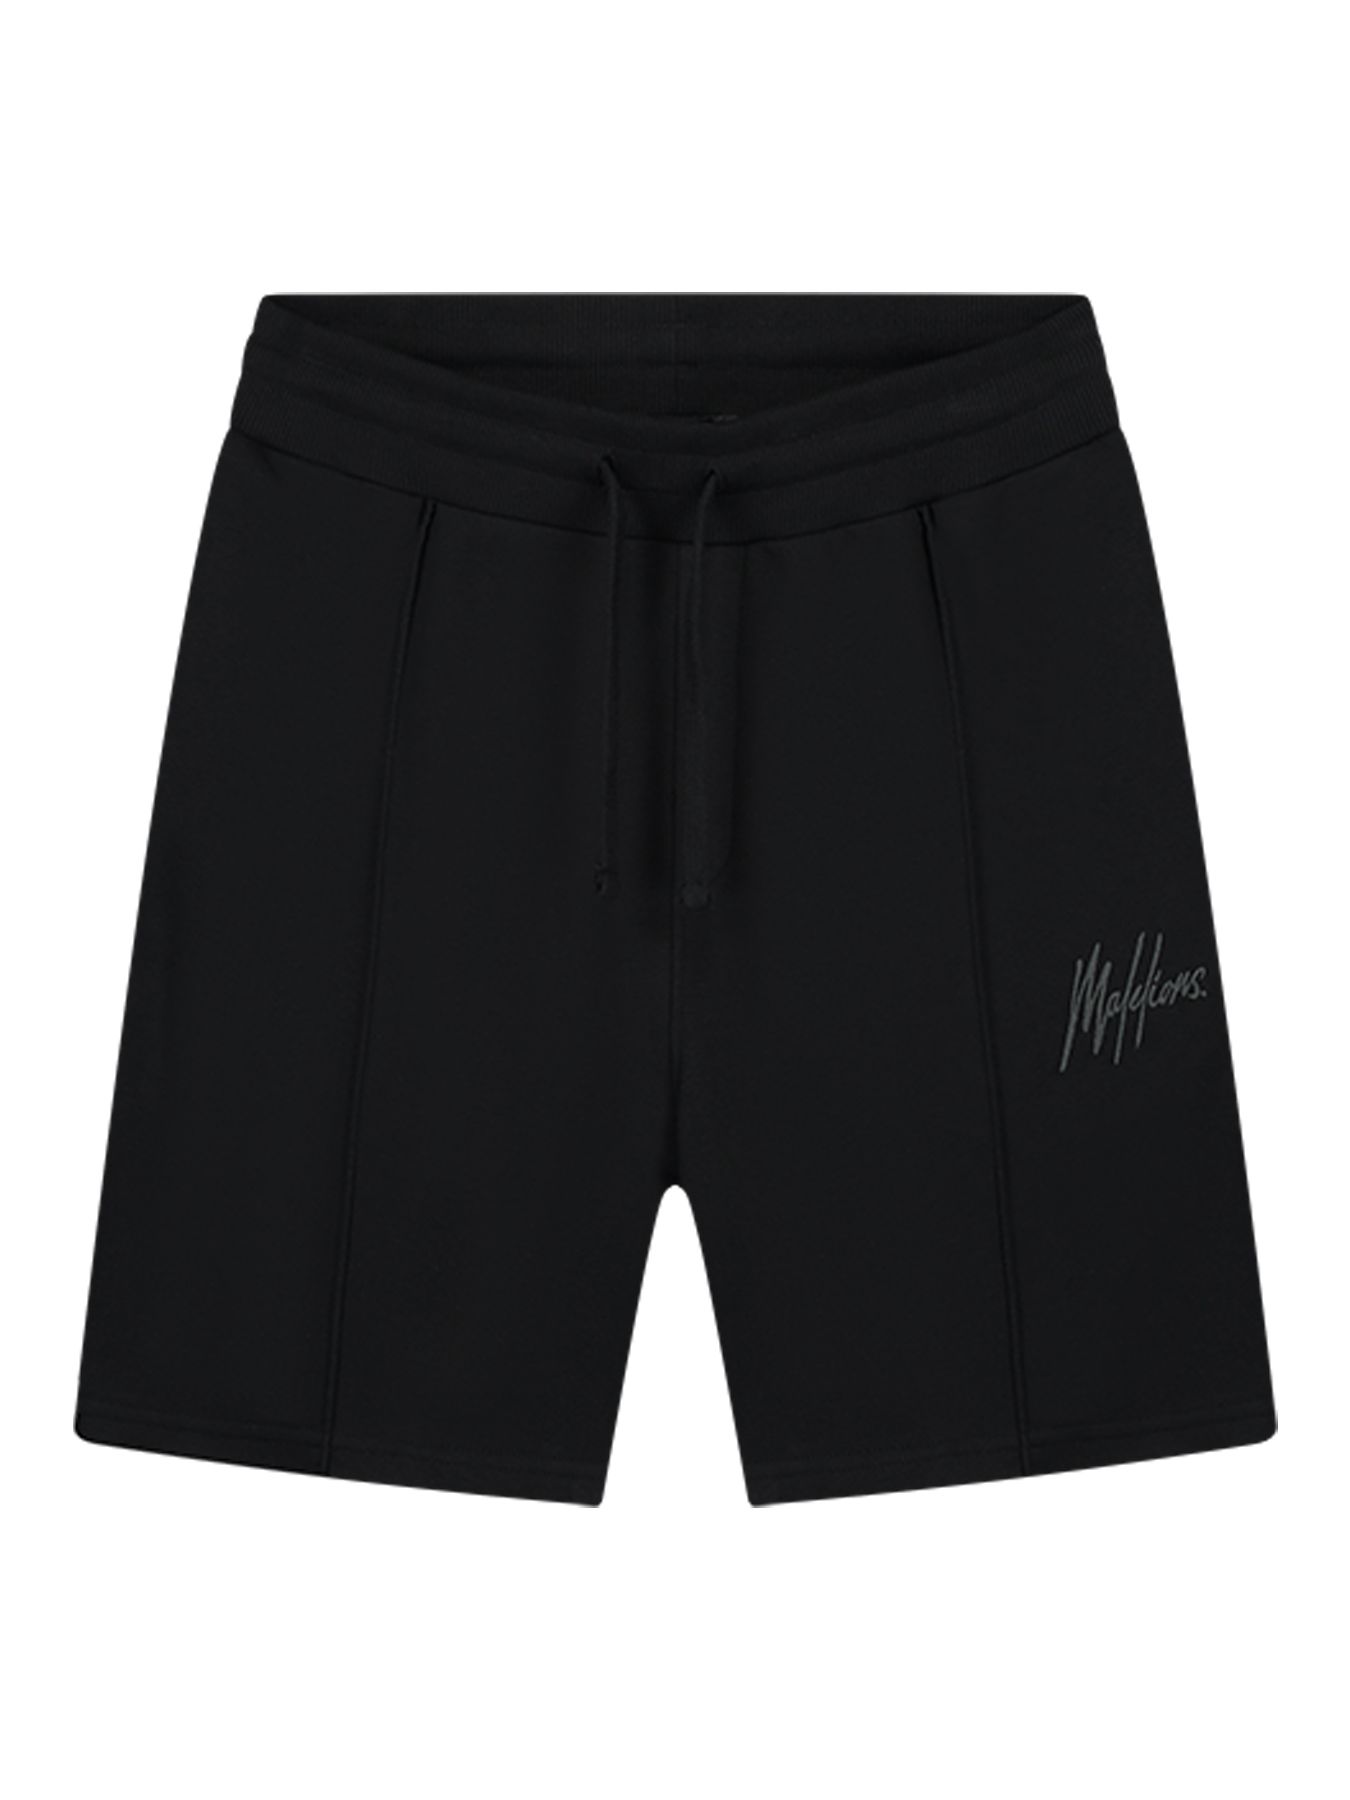 Malelions Men Regular signature shorts Black 00109027-BLC